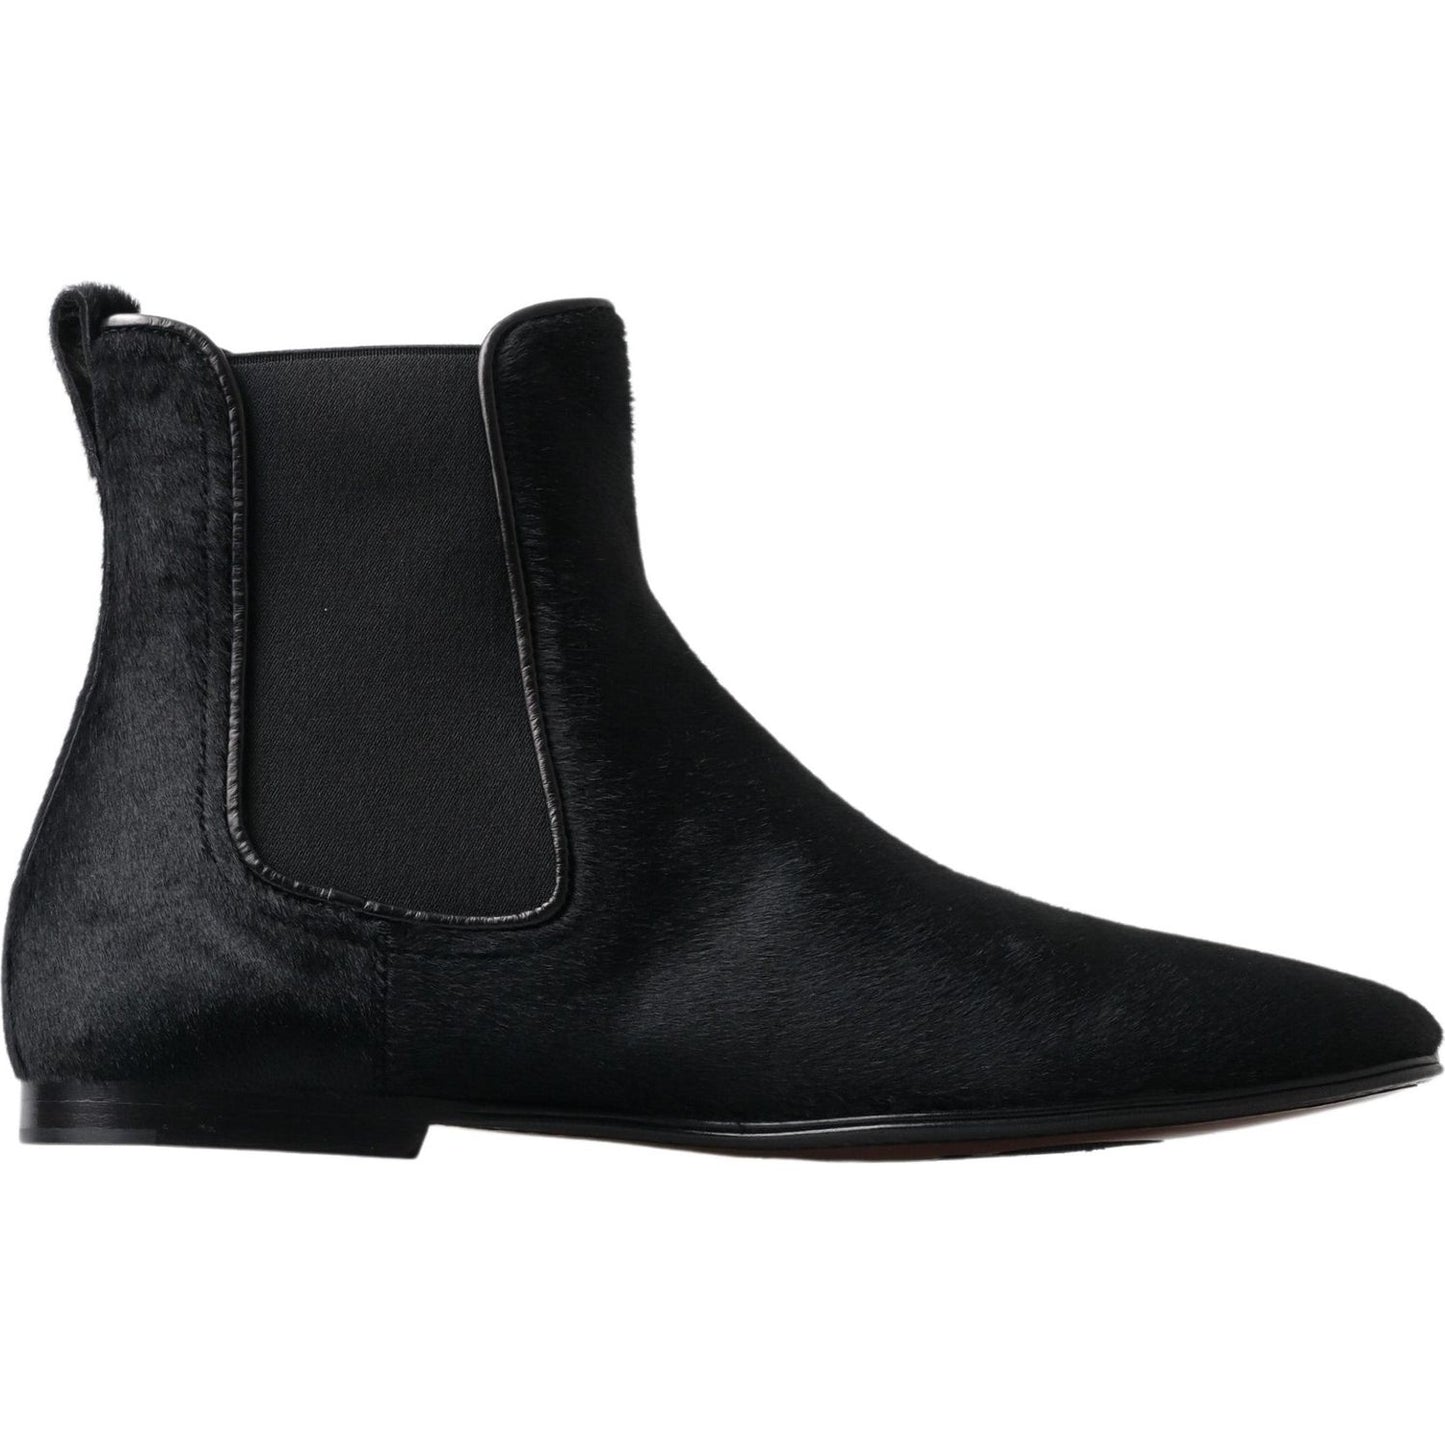 Dolce & Gabbana Elite Italian Leather Chelsea Boots black-leather-chelsea-men-ankle-boots-shoes